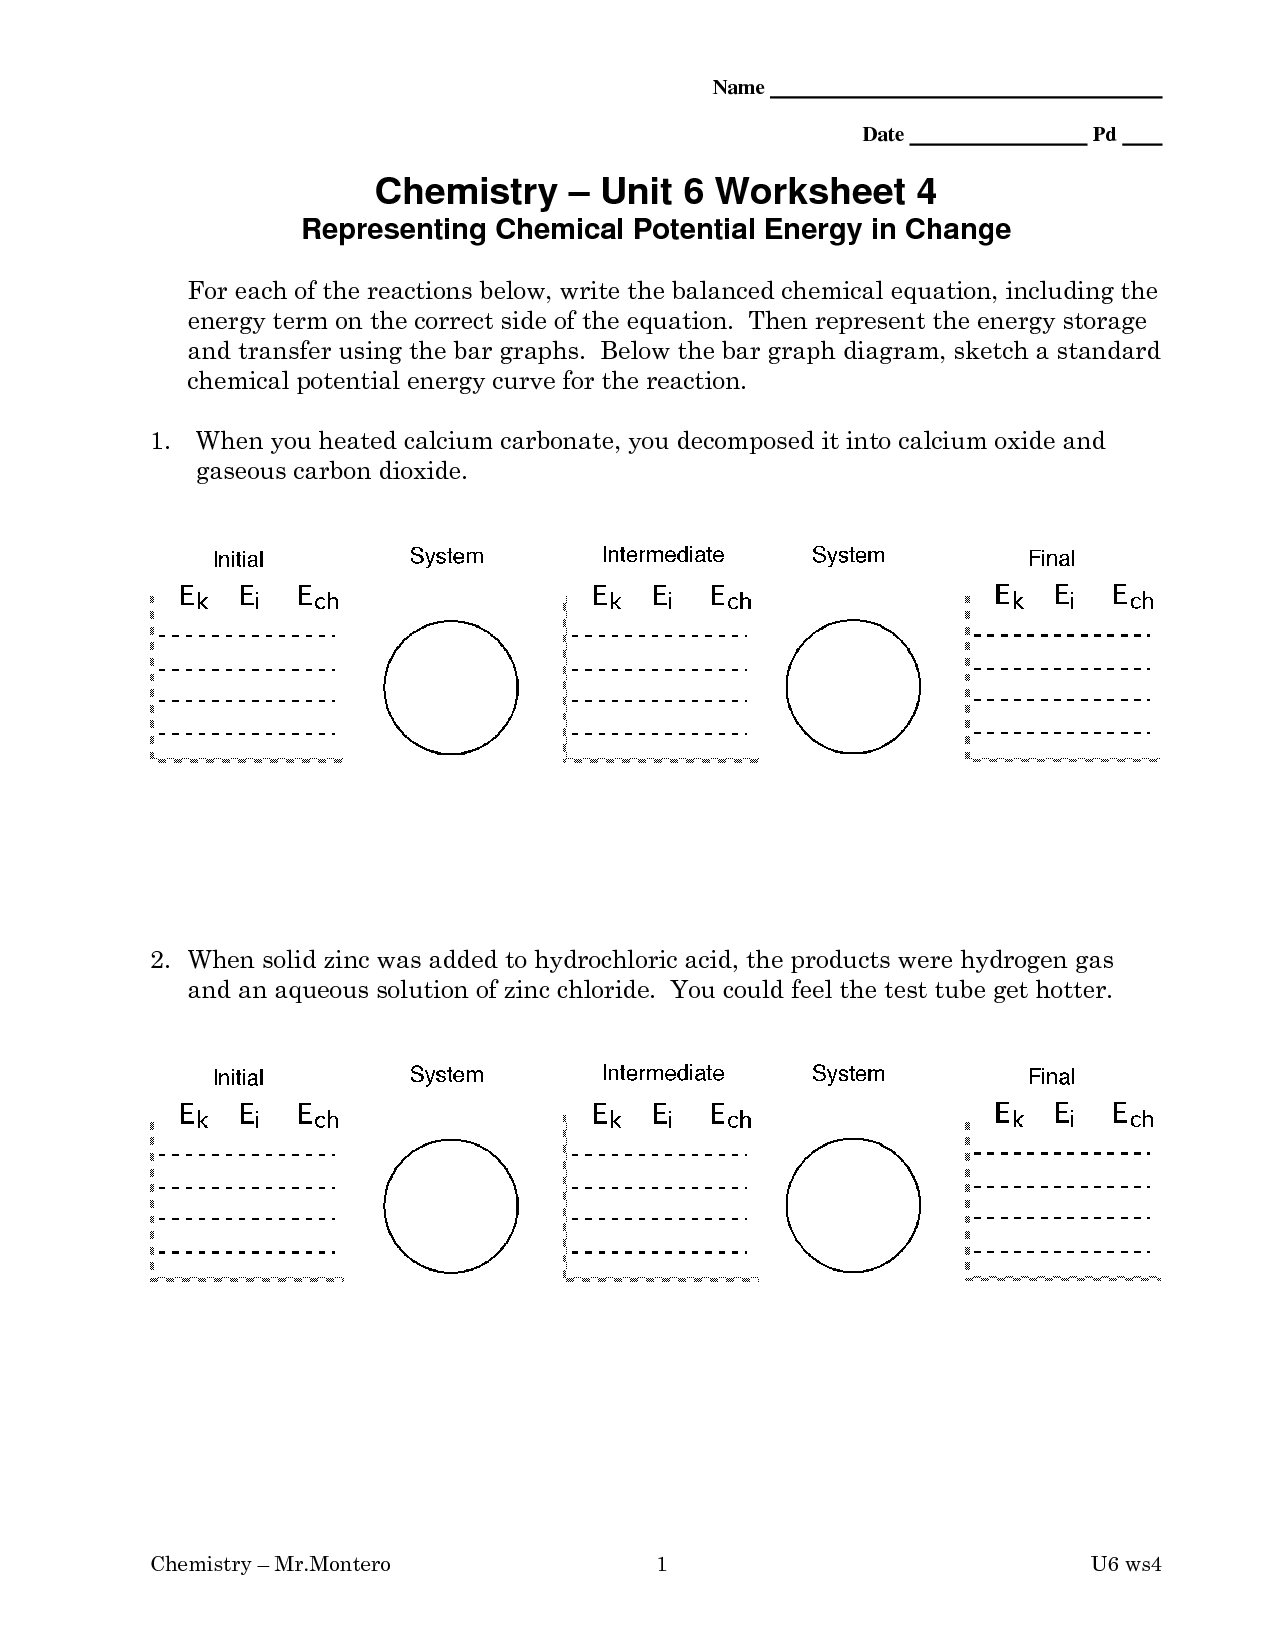 Chemical Potential Energy Worksheet Image